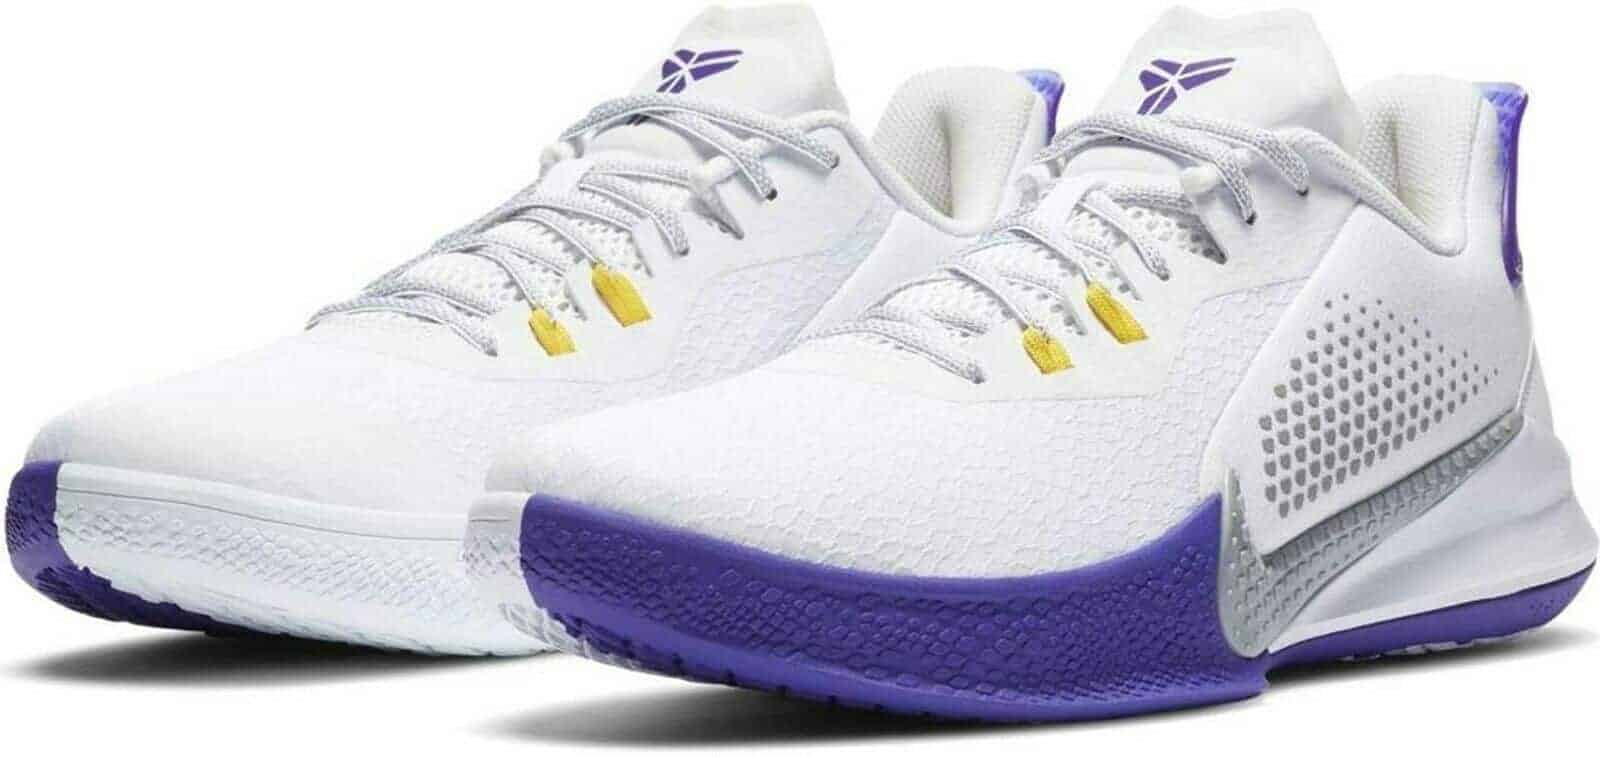 Kobe Bryant Sneakers Nike